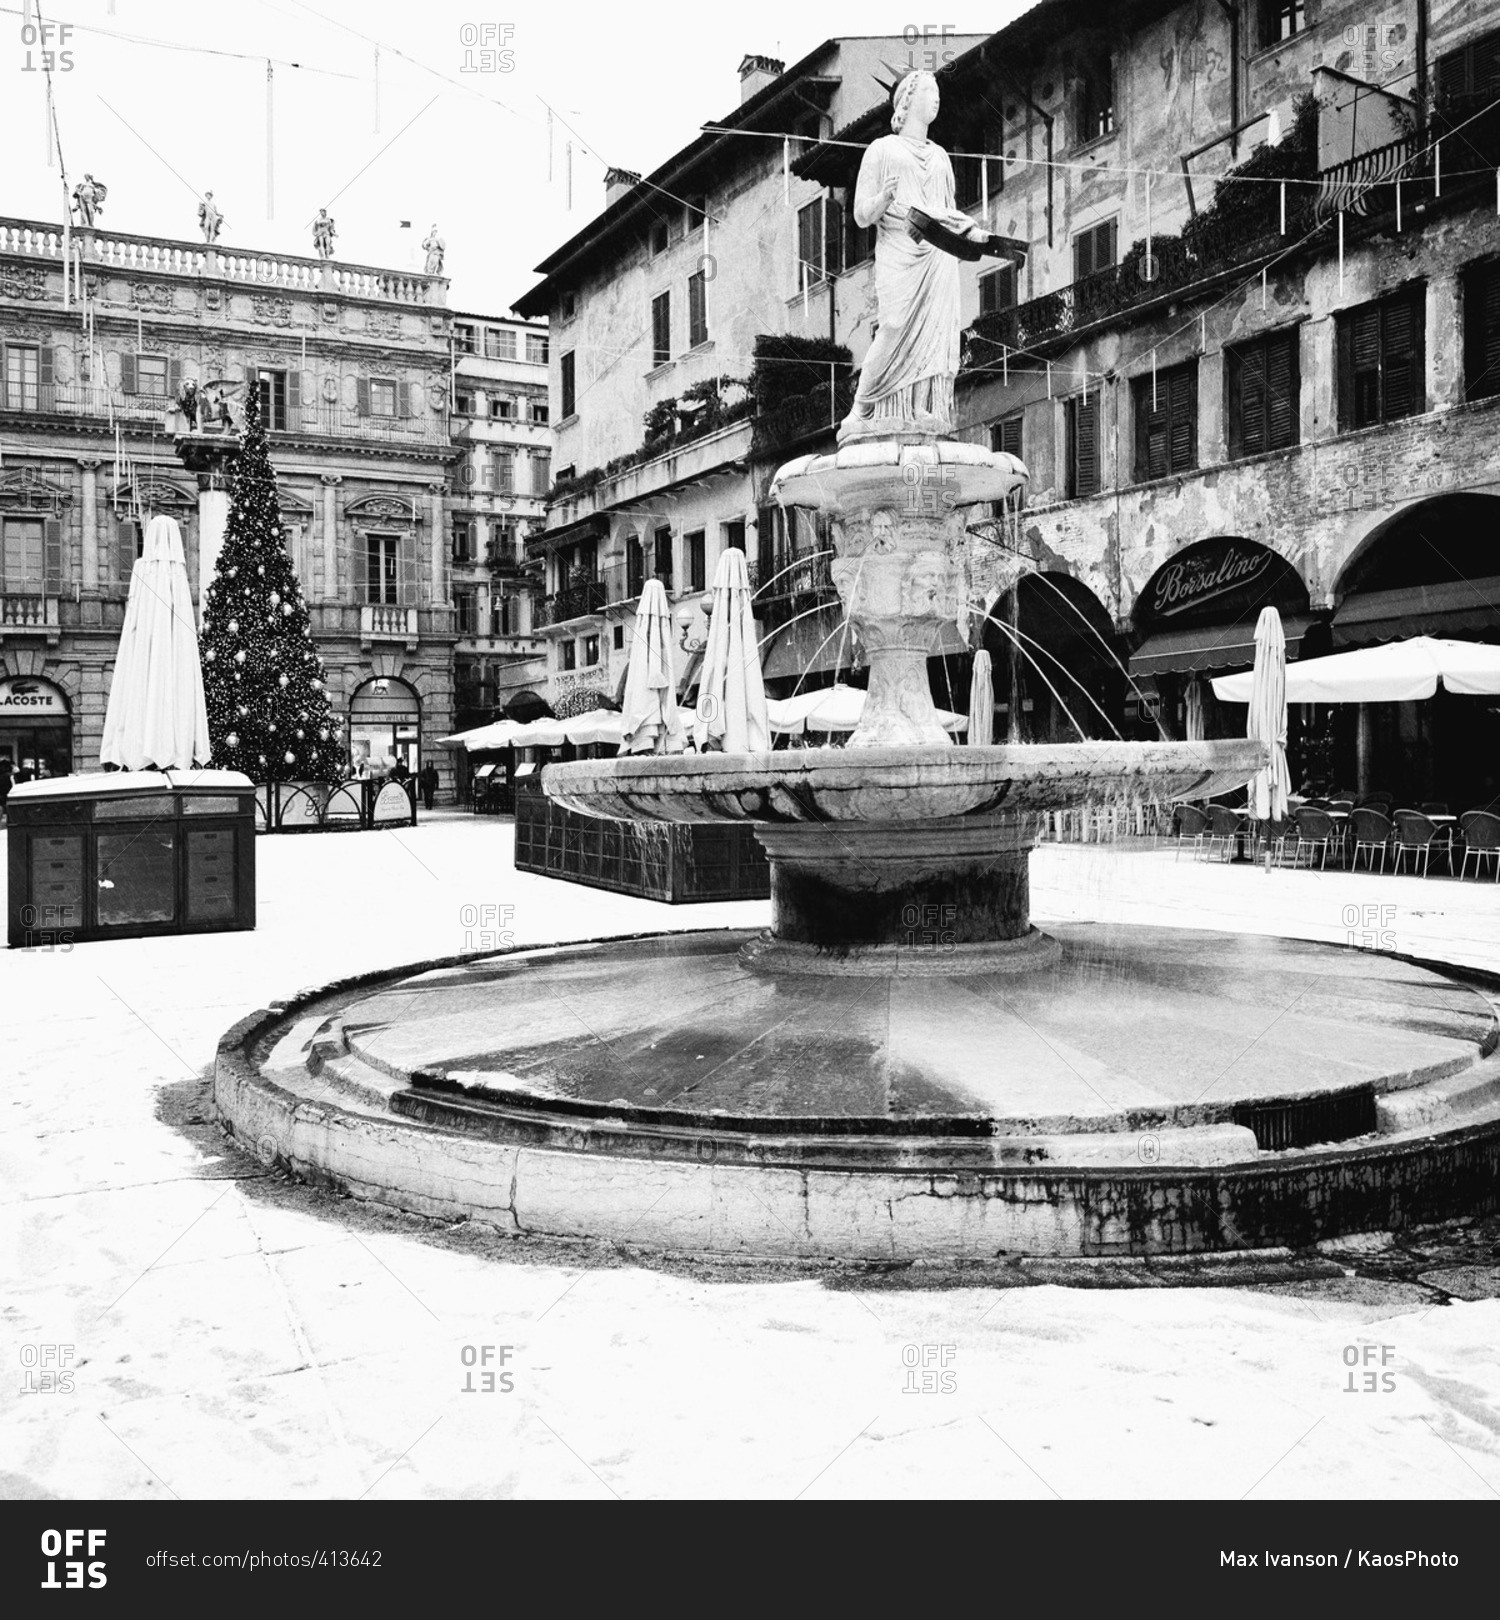 Piazza delle Erbe and the Fontana Madonna Verona during a Christmas snowstorm, Verona, Italy